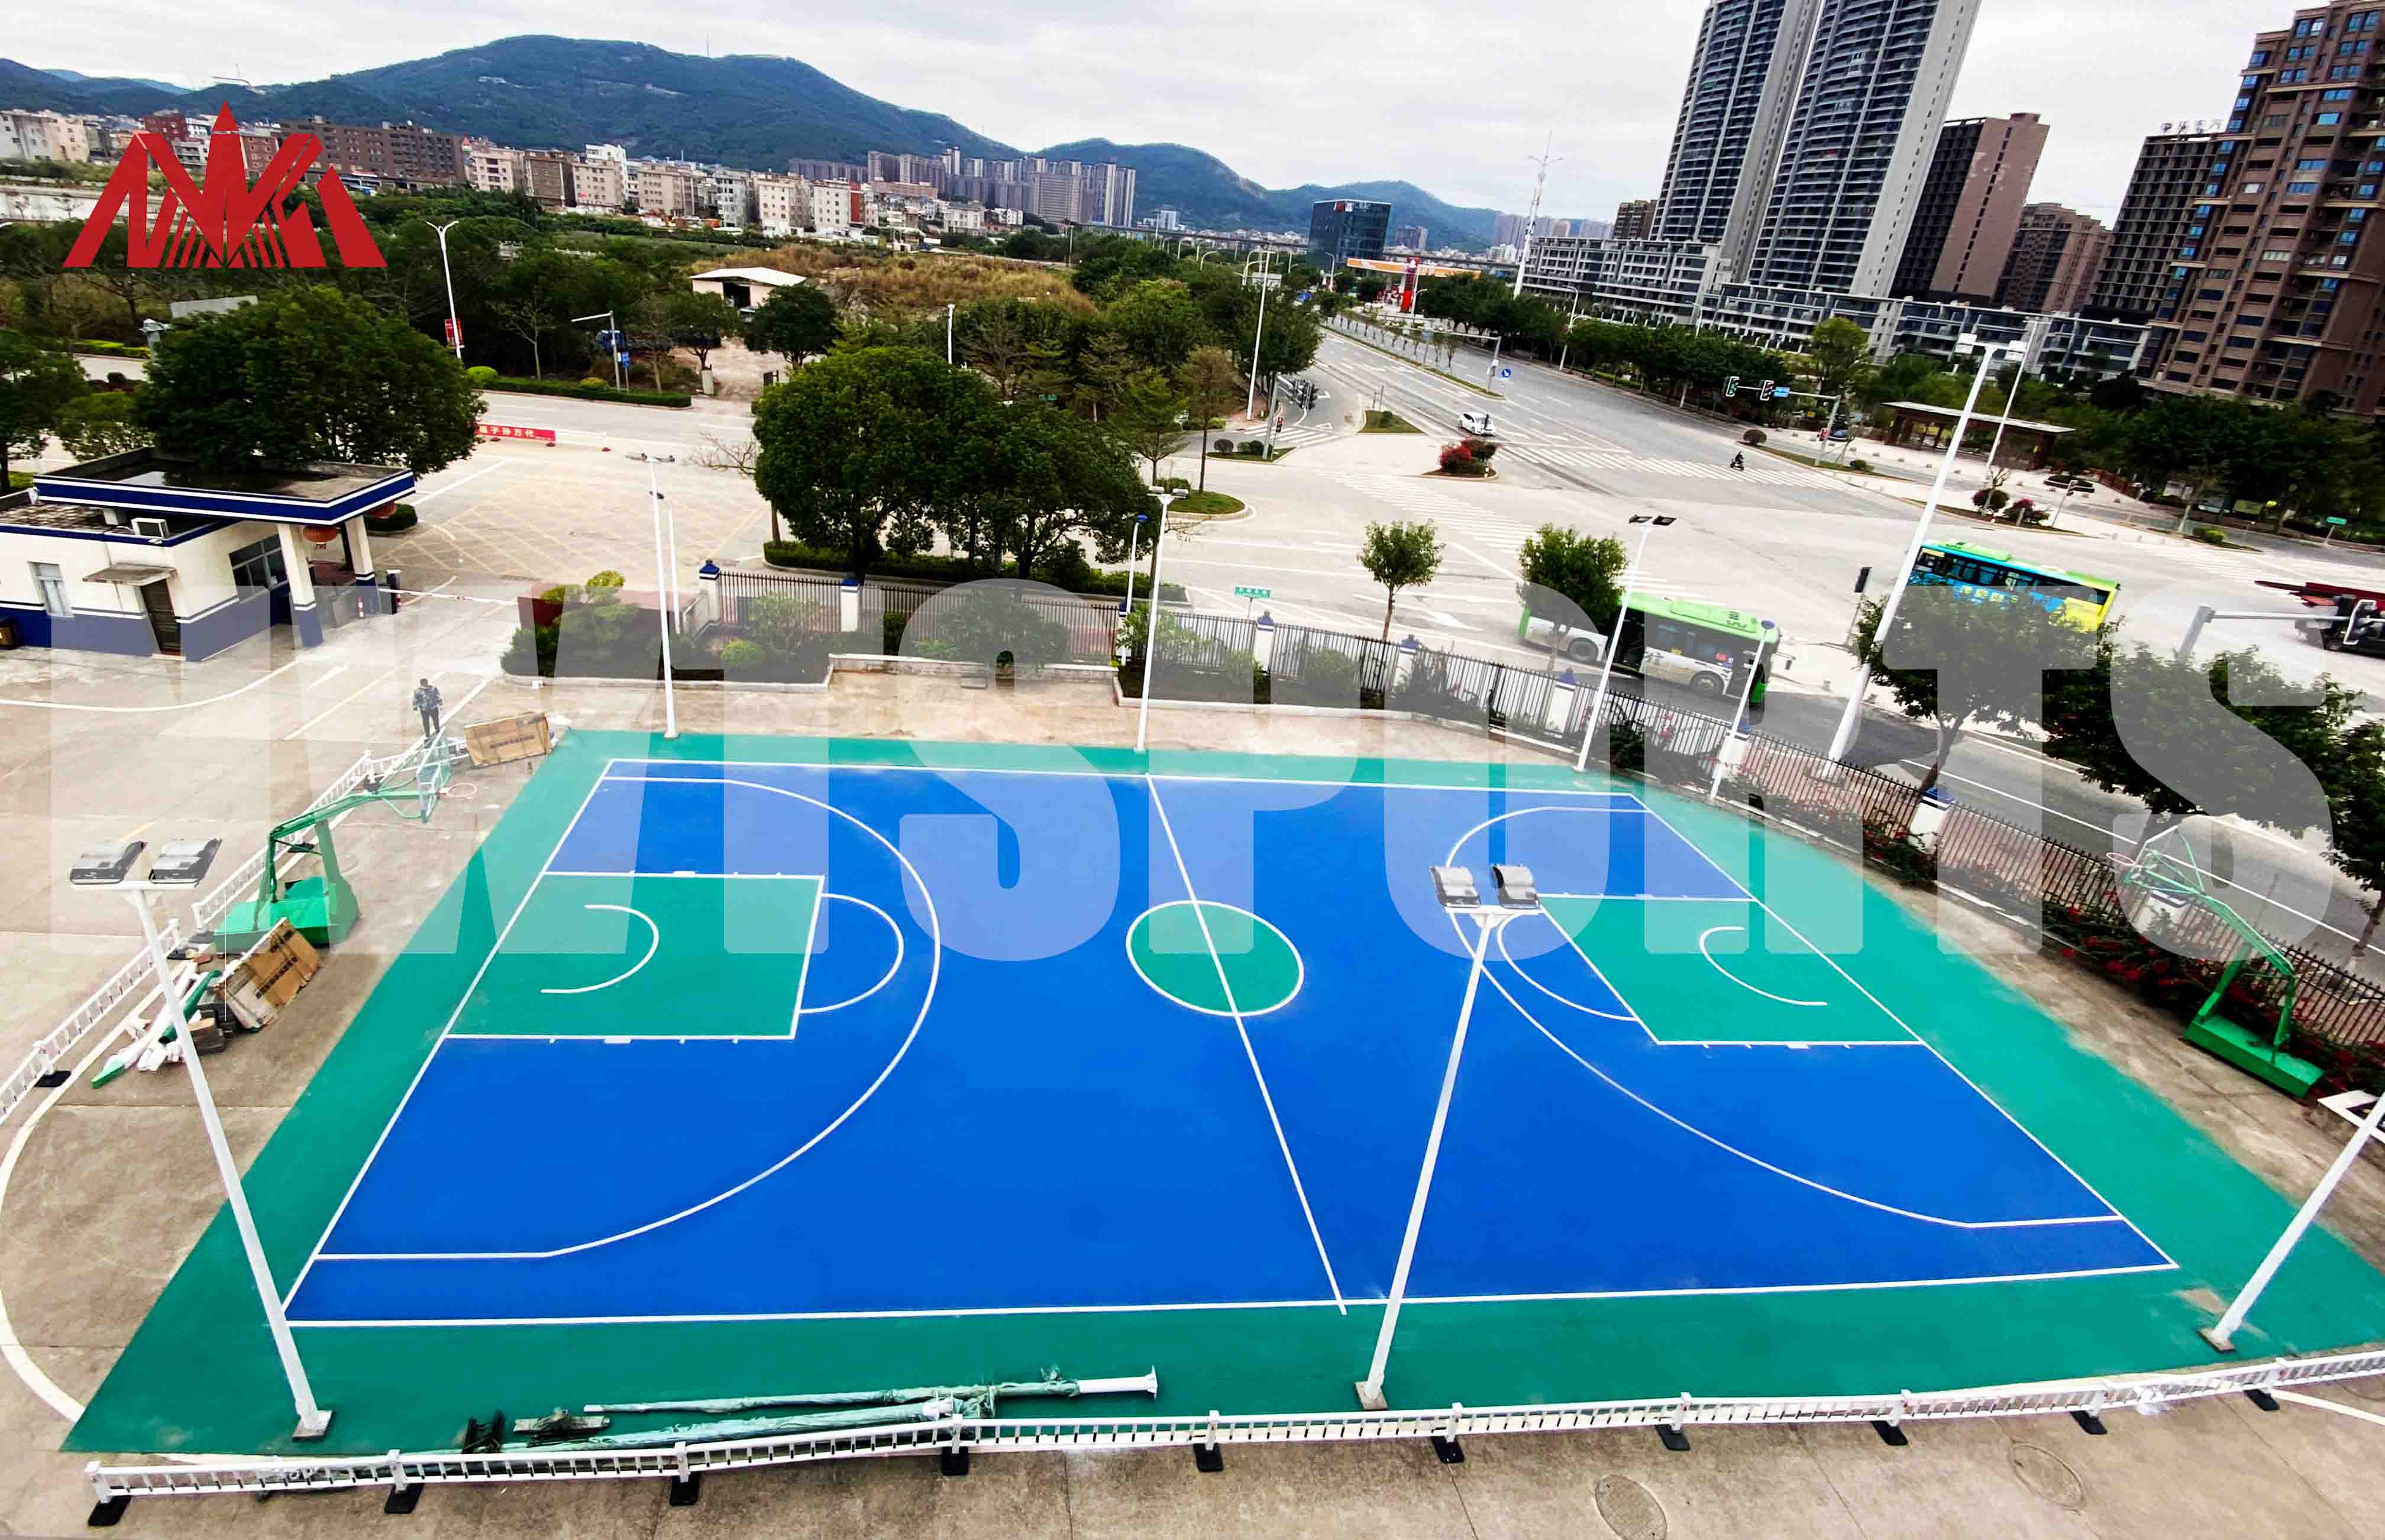 
fuqing Basketball Court